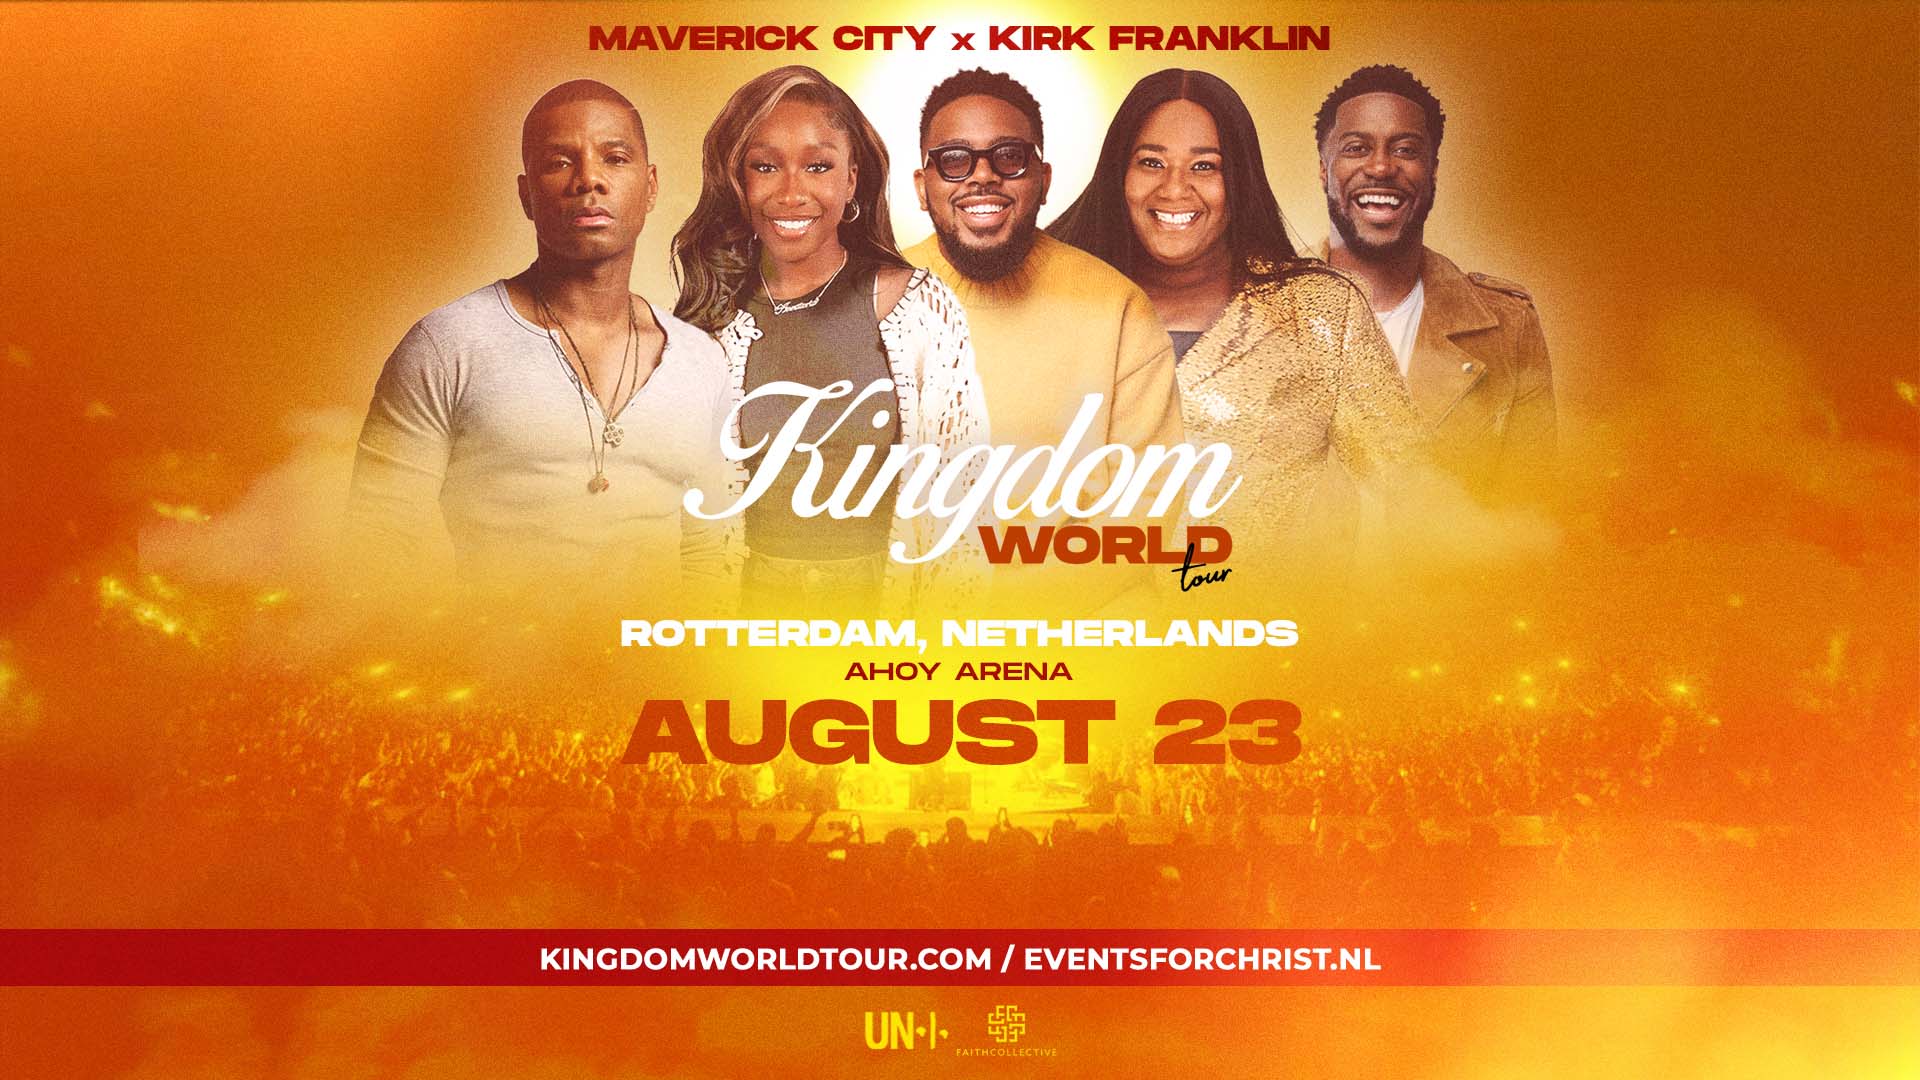 Maverick City x Kirk Franklin Kingdom World Tour